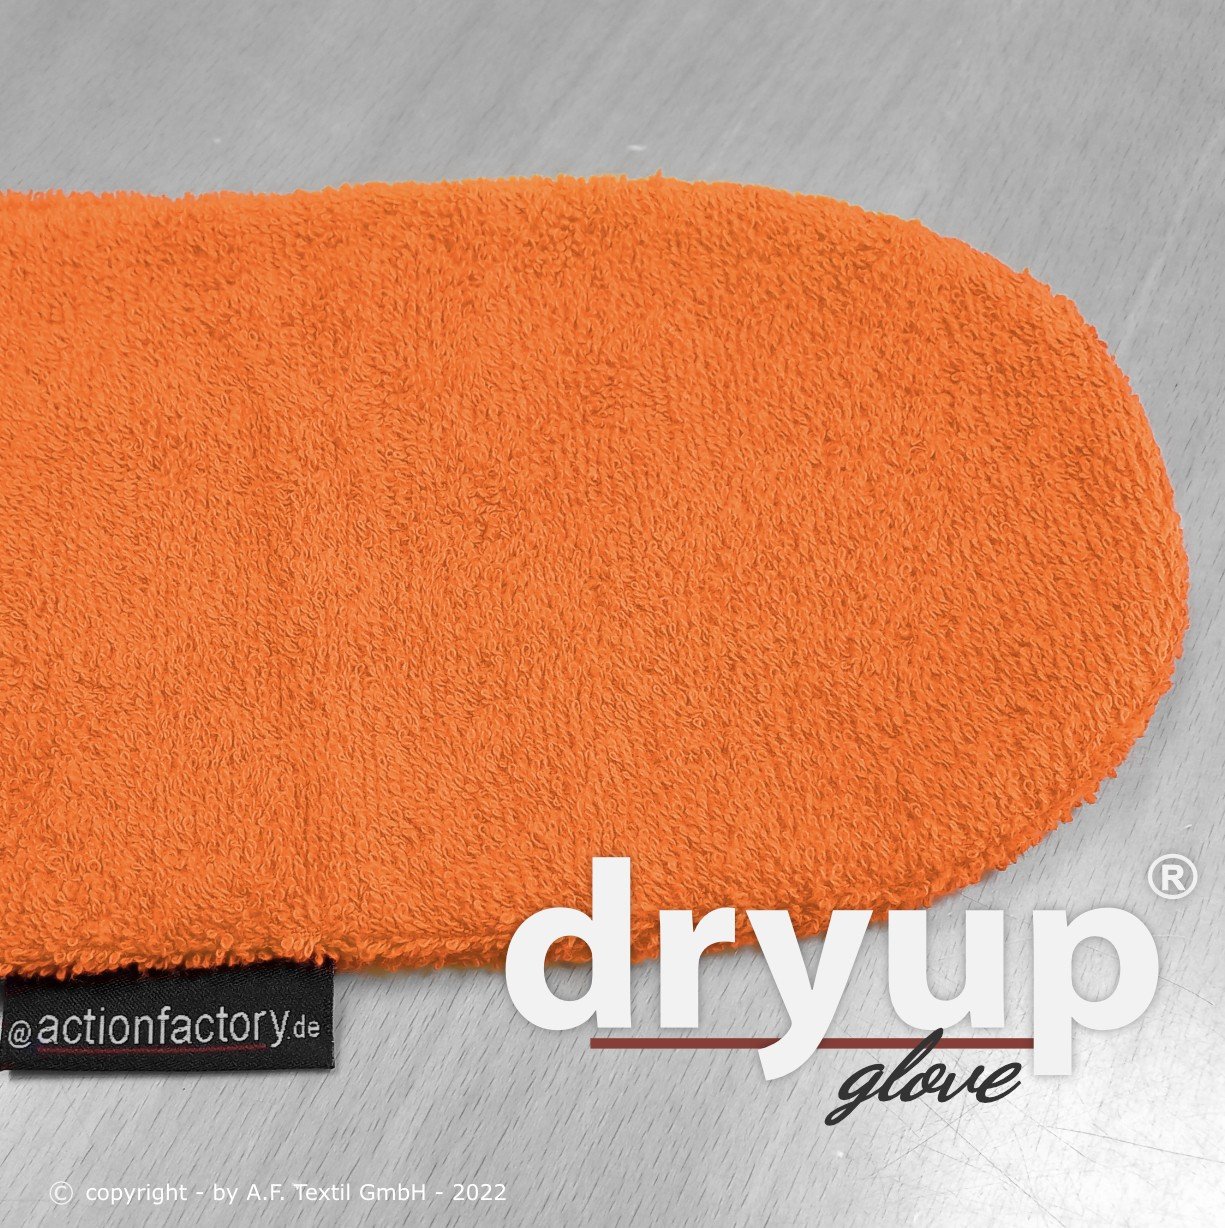 Dryup Glove - Clementine